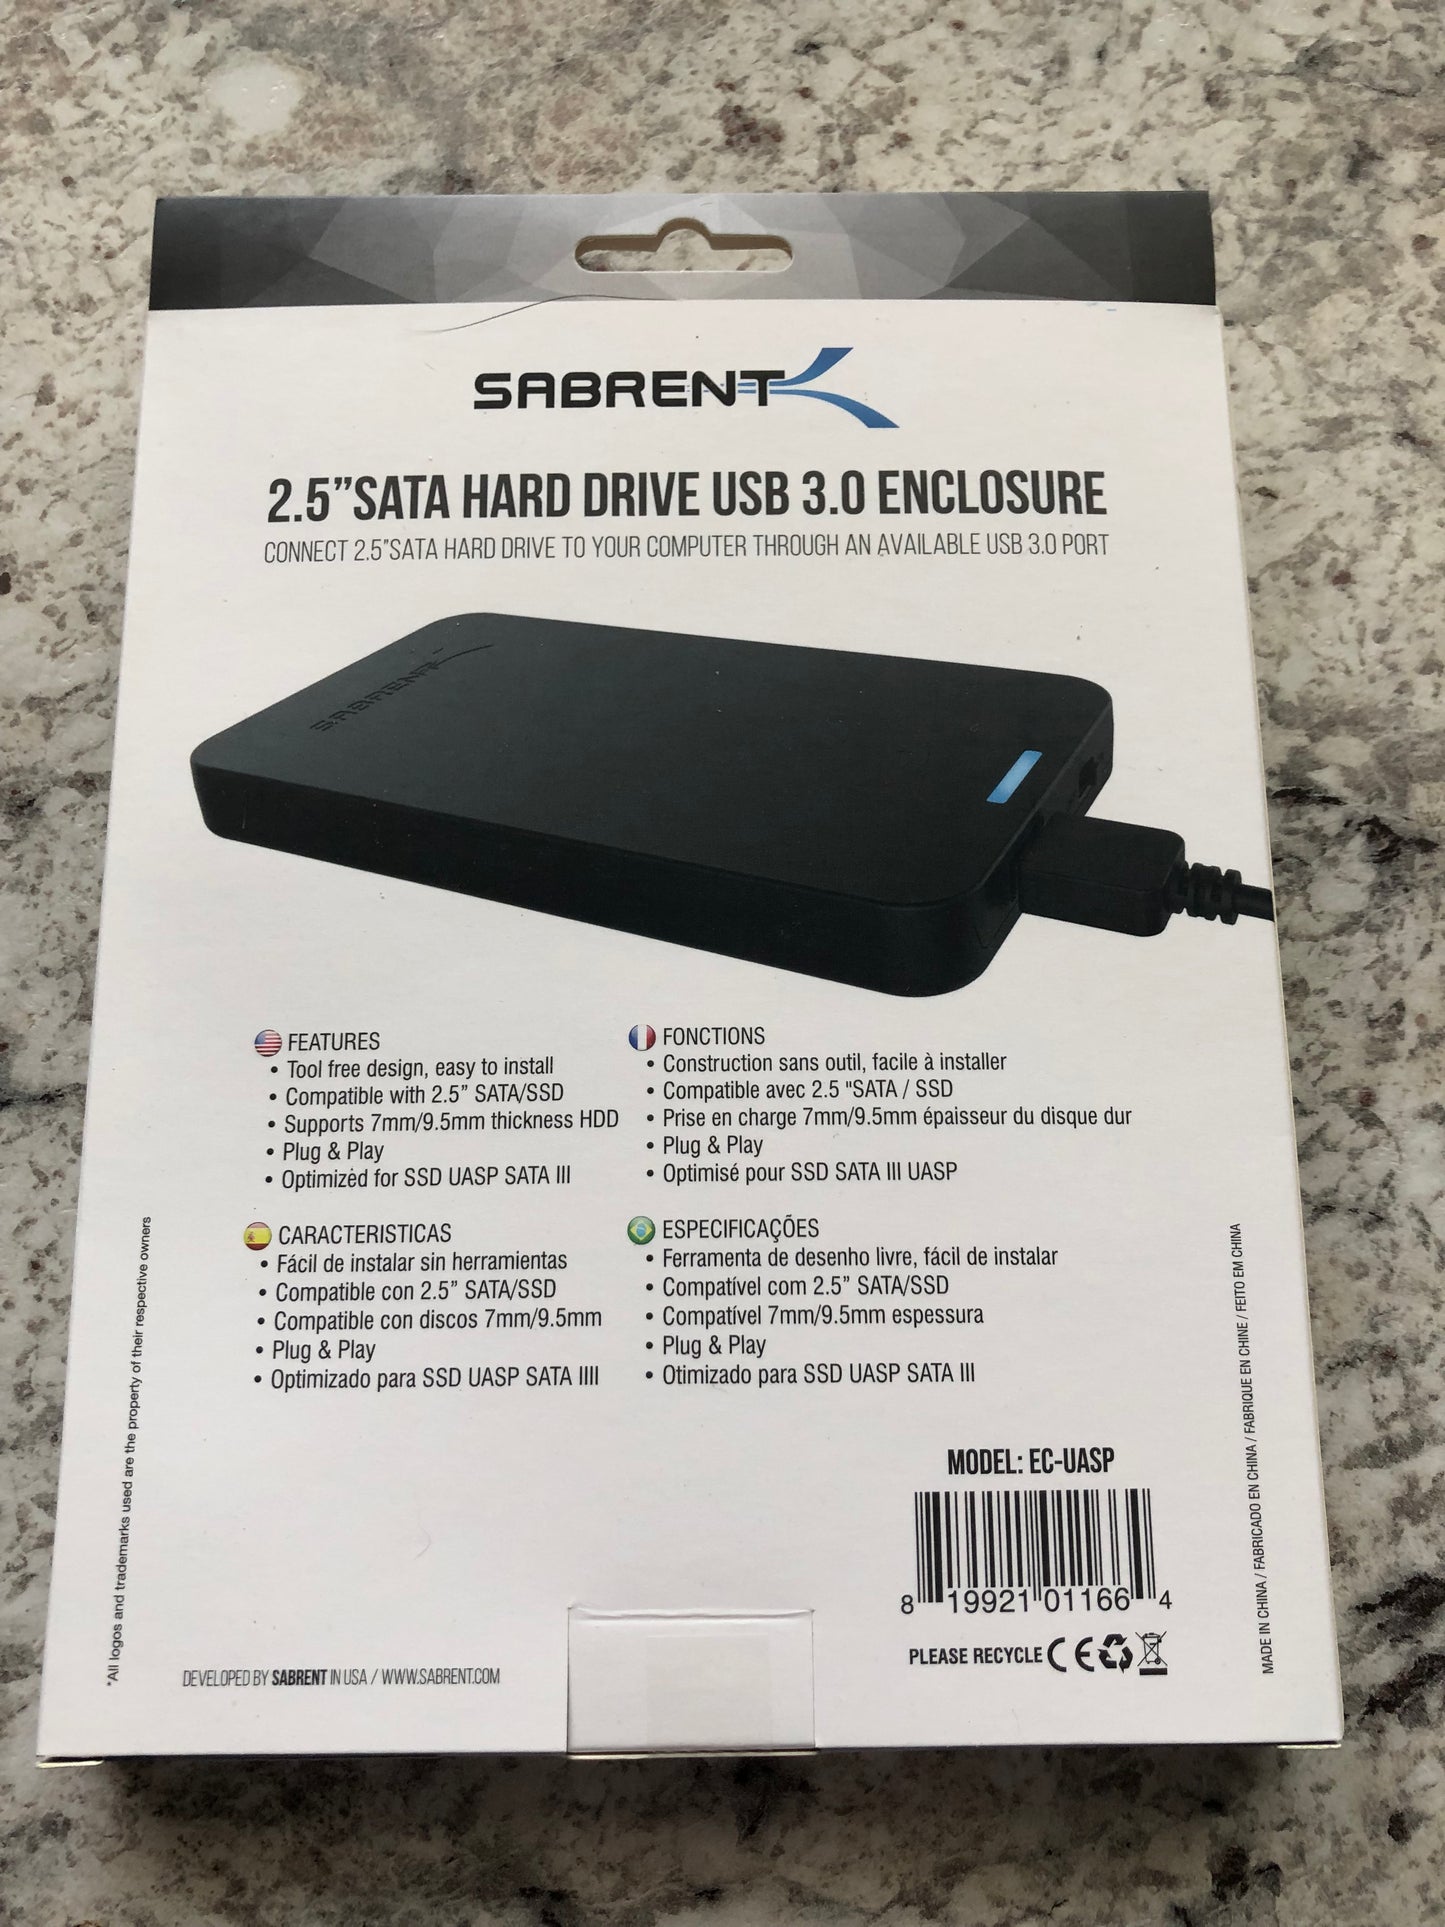 Sabrent 2.5" SATA Hard Drive USB 3.0 Enclosure